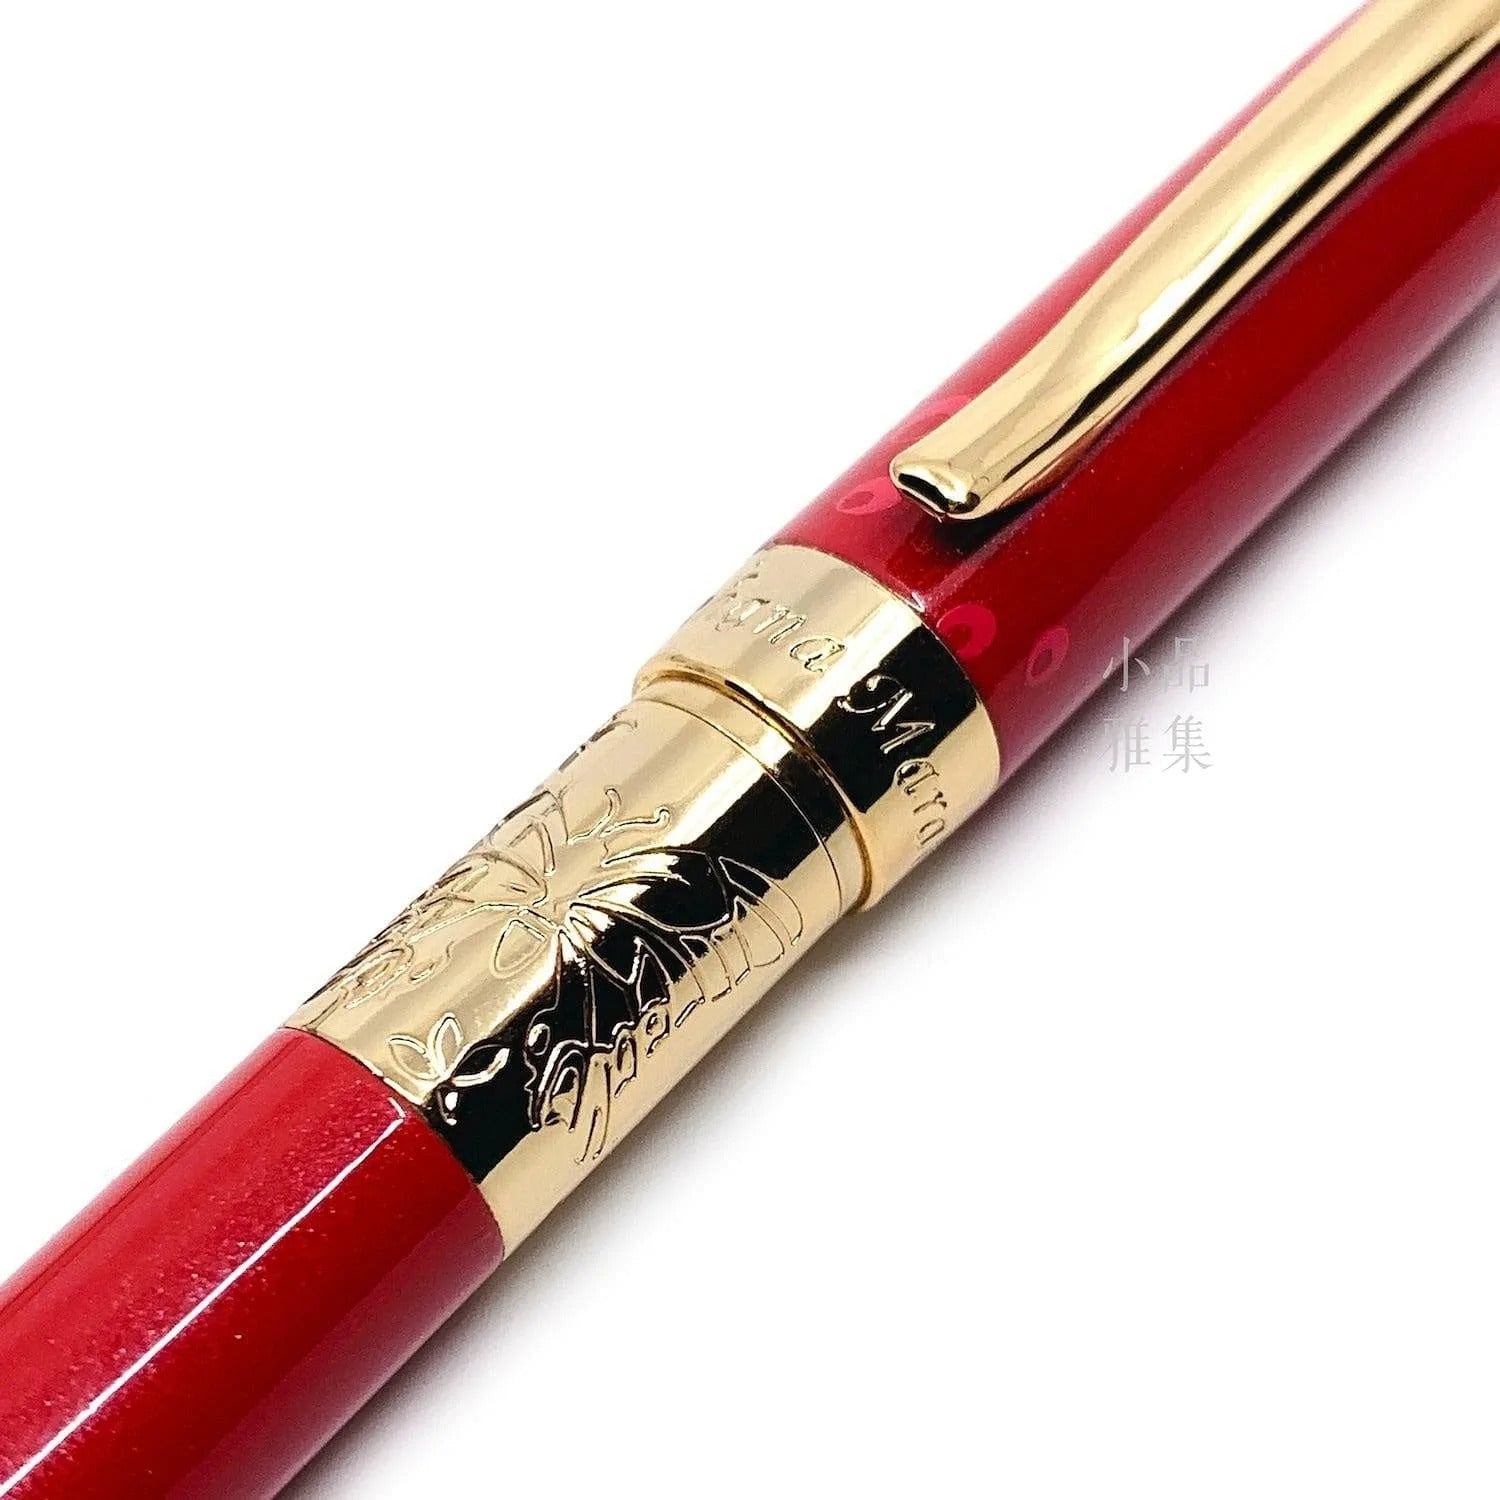 IWI Safari Limited Edition Fountain Pen